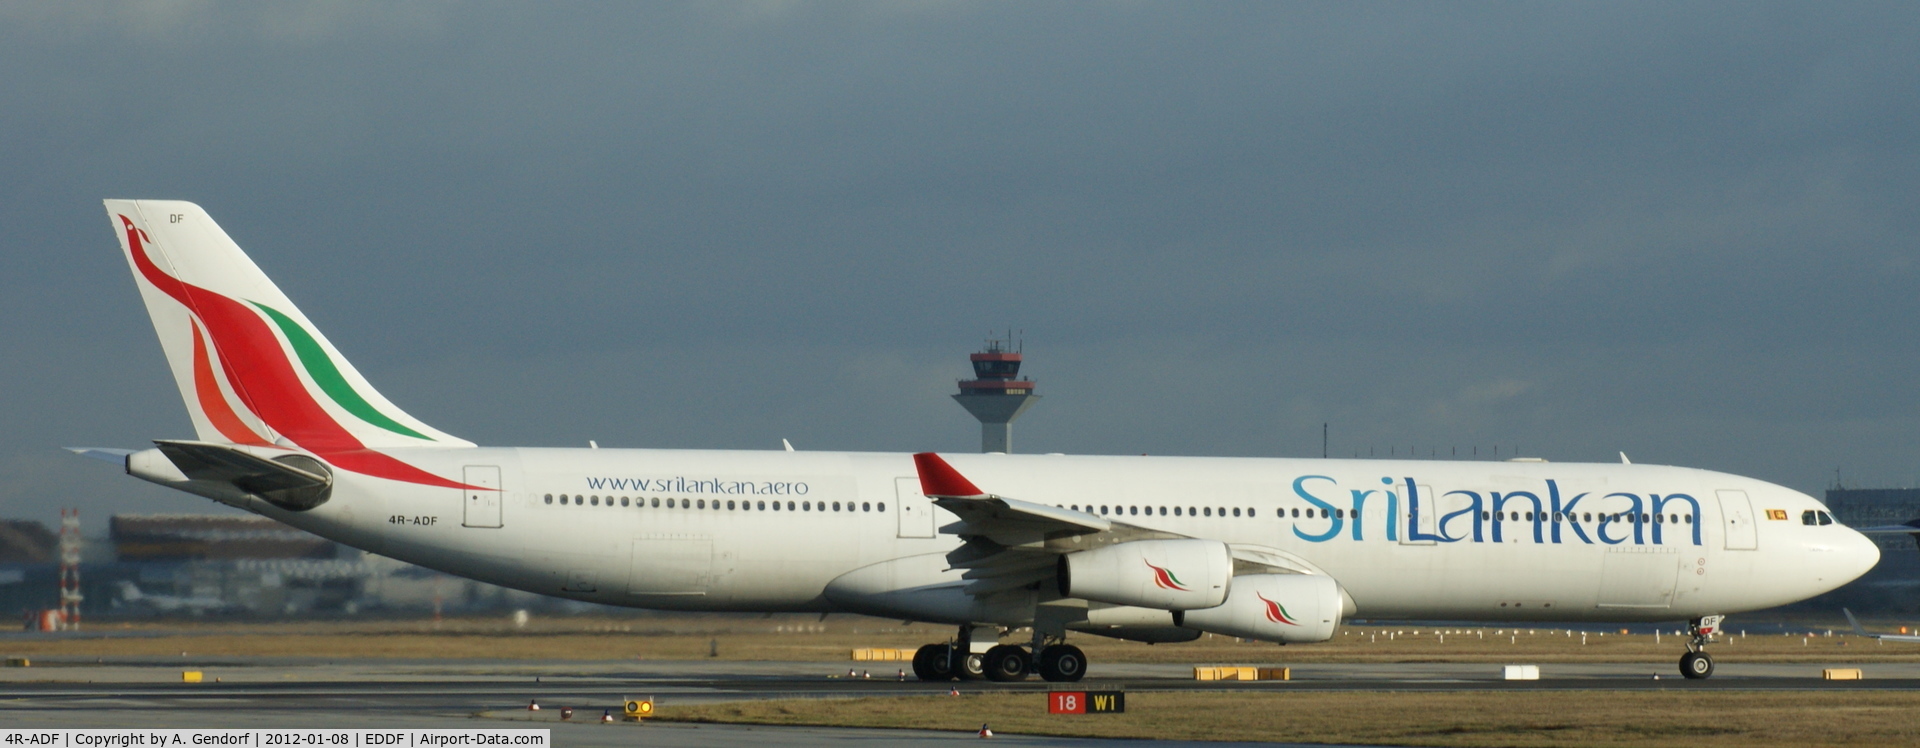 4R-ADF, 2000 Airbus A340-313 C/N 374, Srilankan Airlines, waiting on runway 18 for departure at Frankfurt Int´l (EDDF)